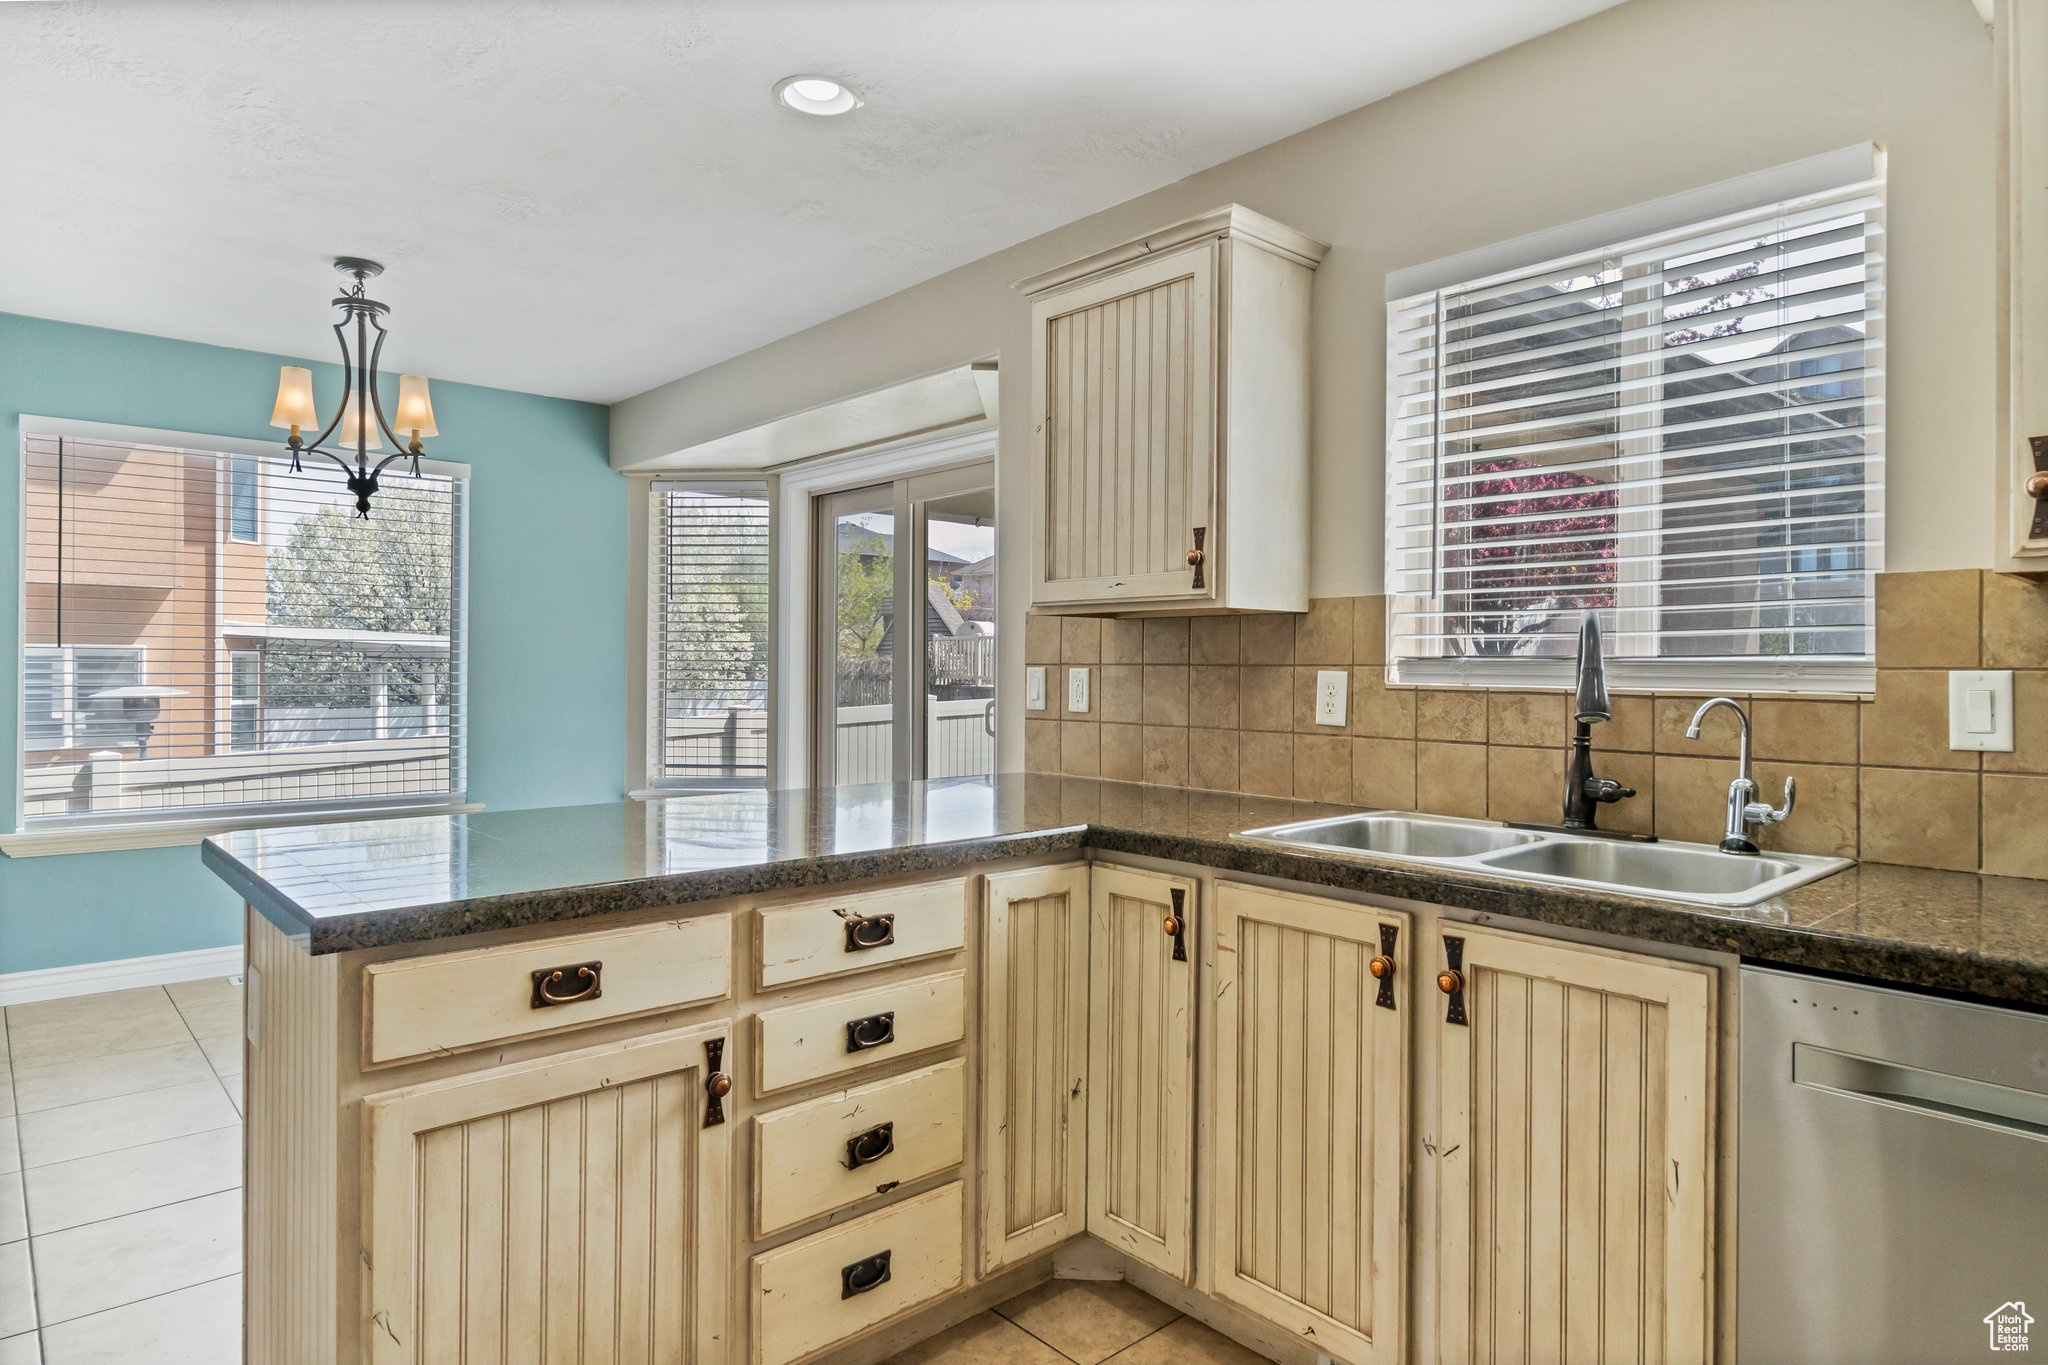 Kitchen featuring backsplash, kitchen peninsula, sink, stainless steel dishwasher, and light tile floors